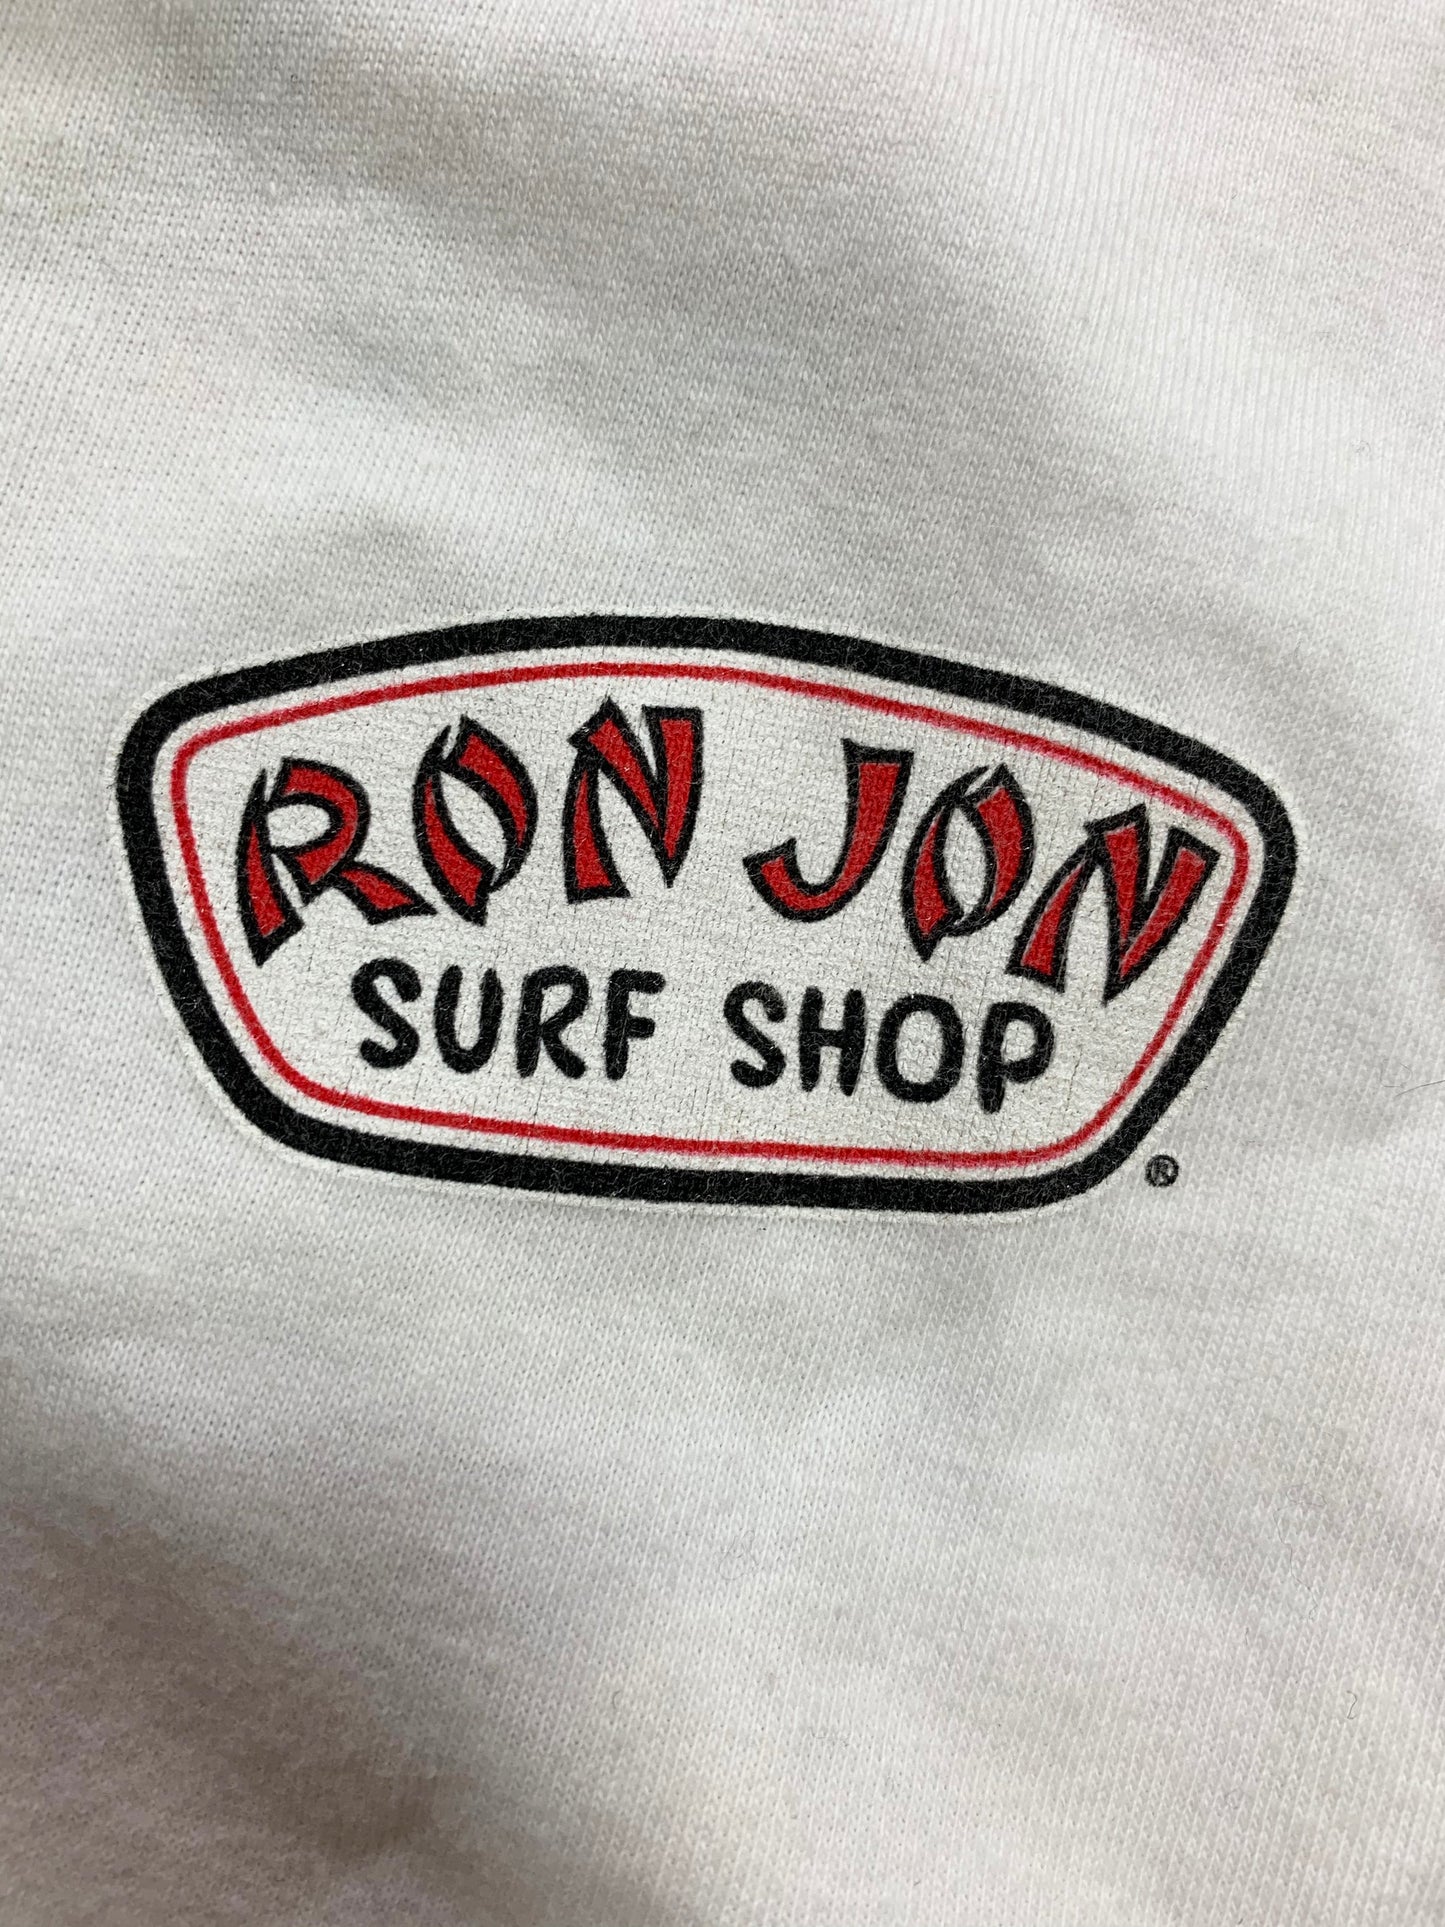 【RONJON SURF SHOP】ロンジョンサーフショップ ホワイト Tシャツ (women's M)